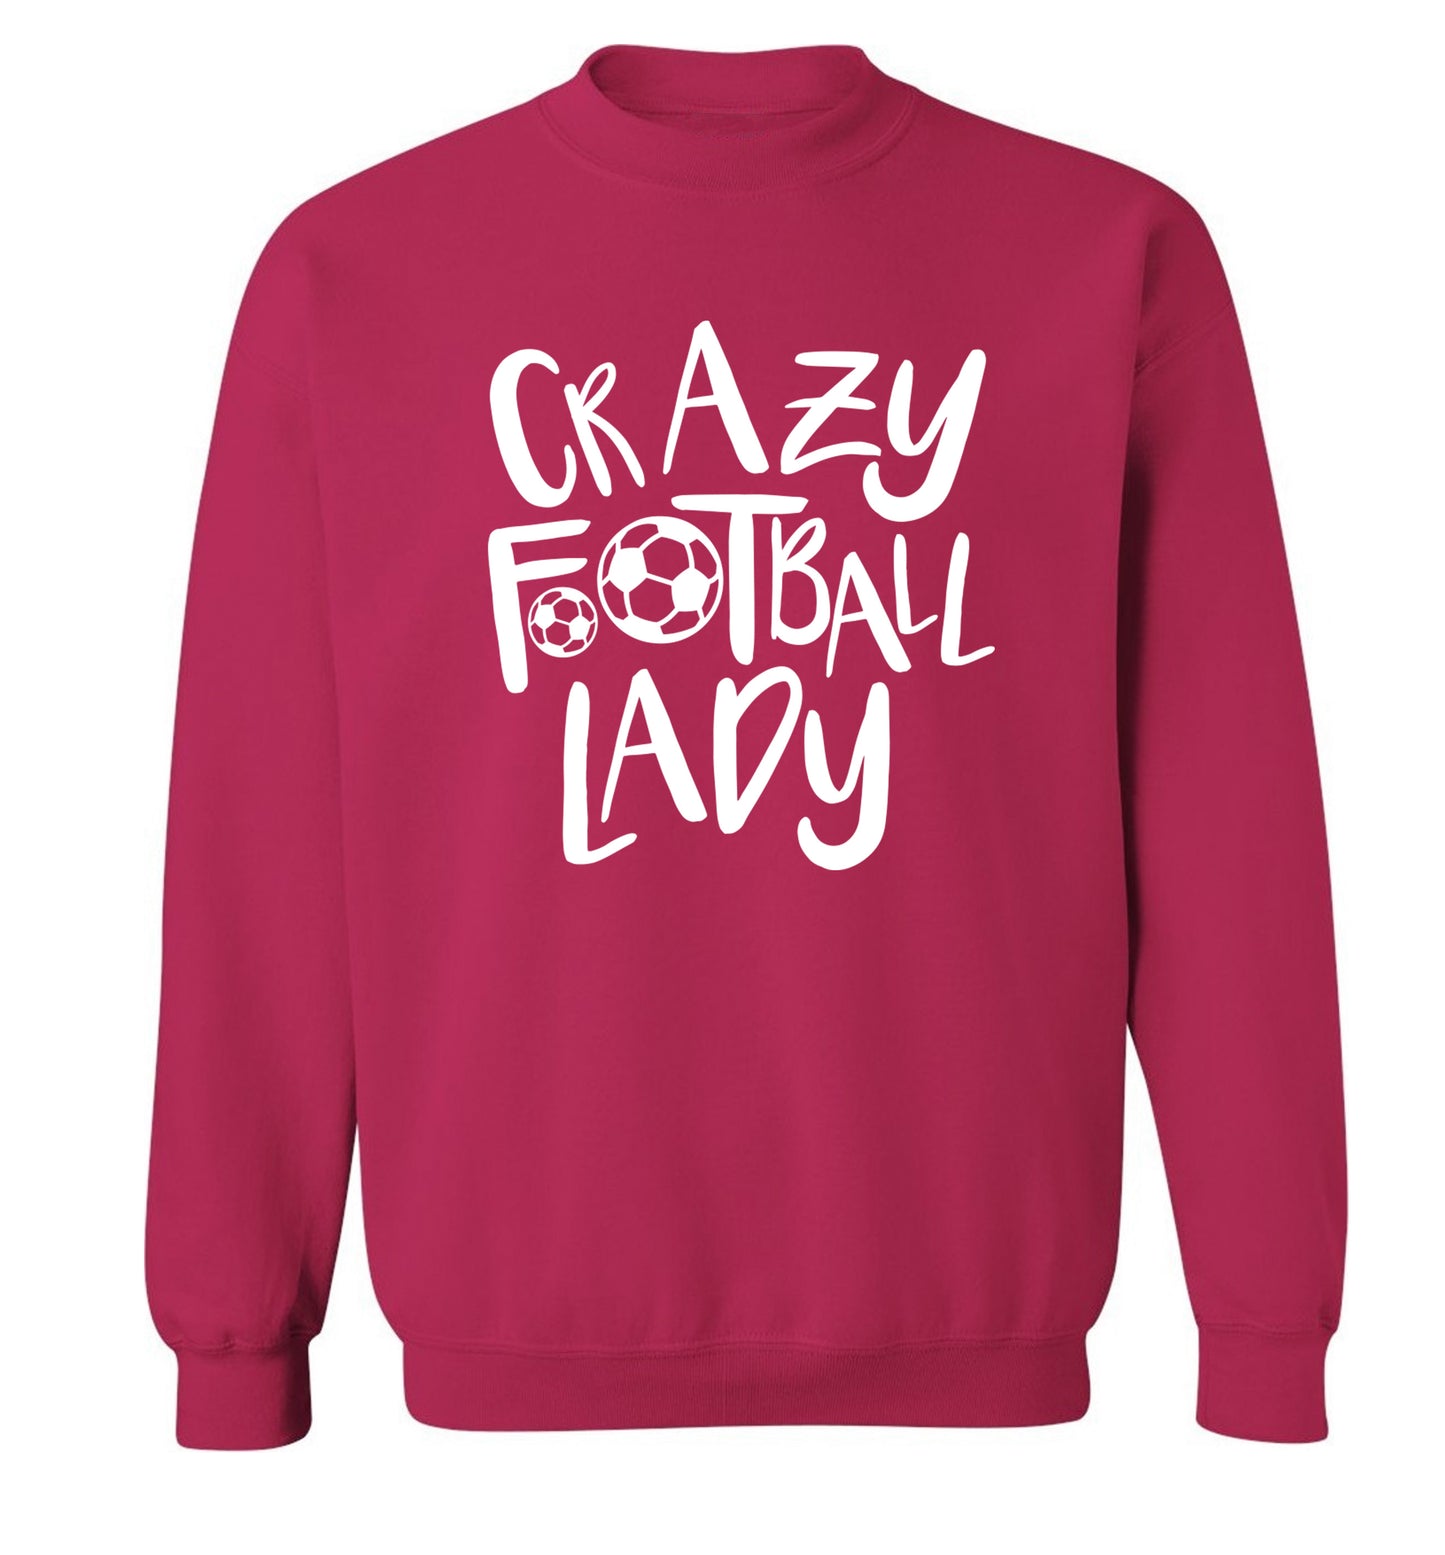 Crazy football lady Adult's unisexpink Sweater 2XL